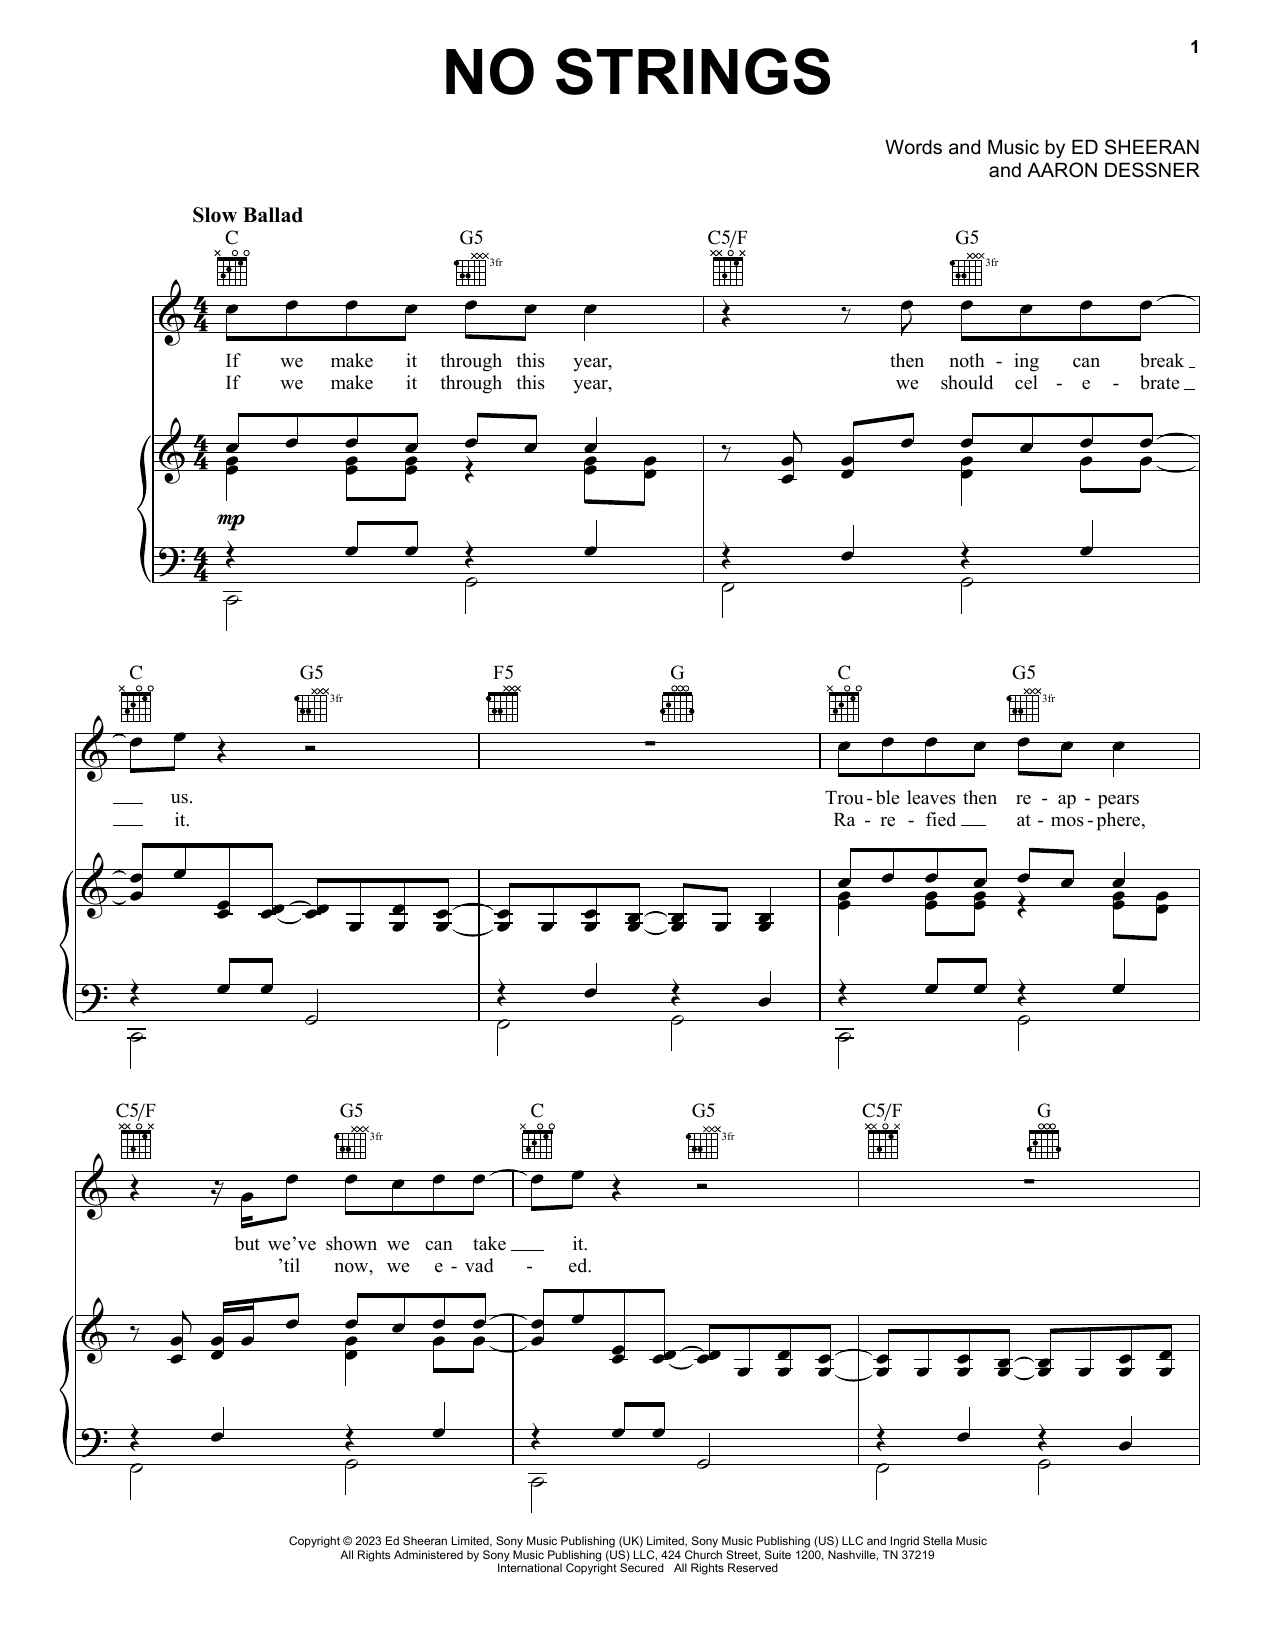 Ed Sheeran No Strings Sheet Music Notes & Chords for Piano, Vocal & Guitar Chords (Right-Hand Melody) - Download or Print PDF